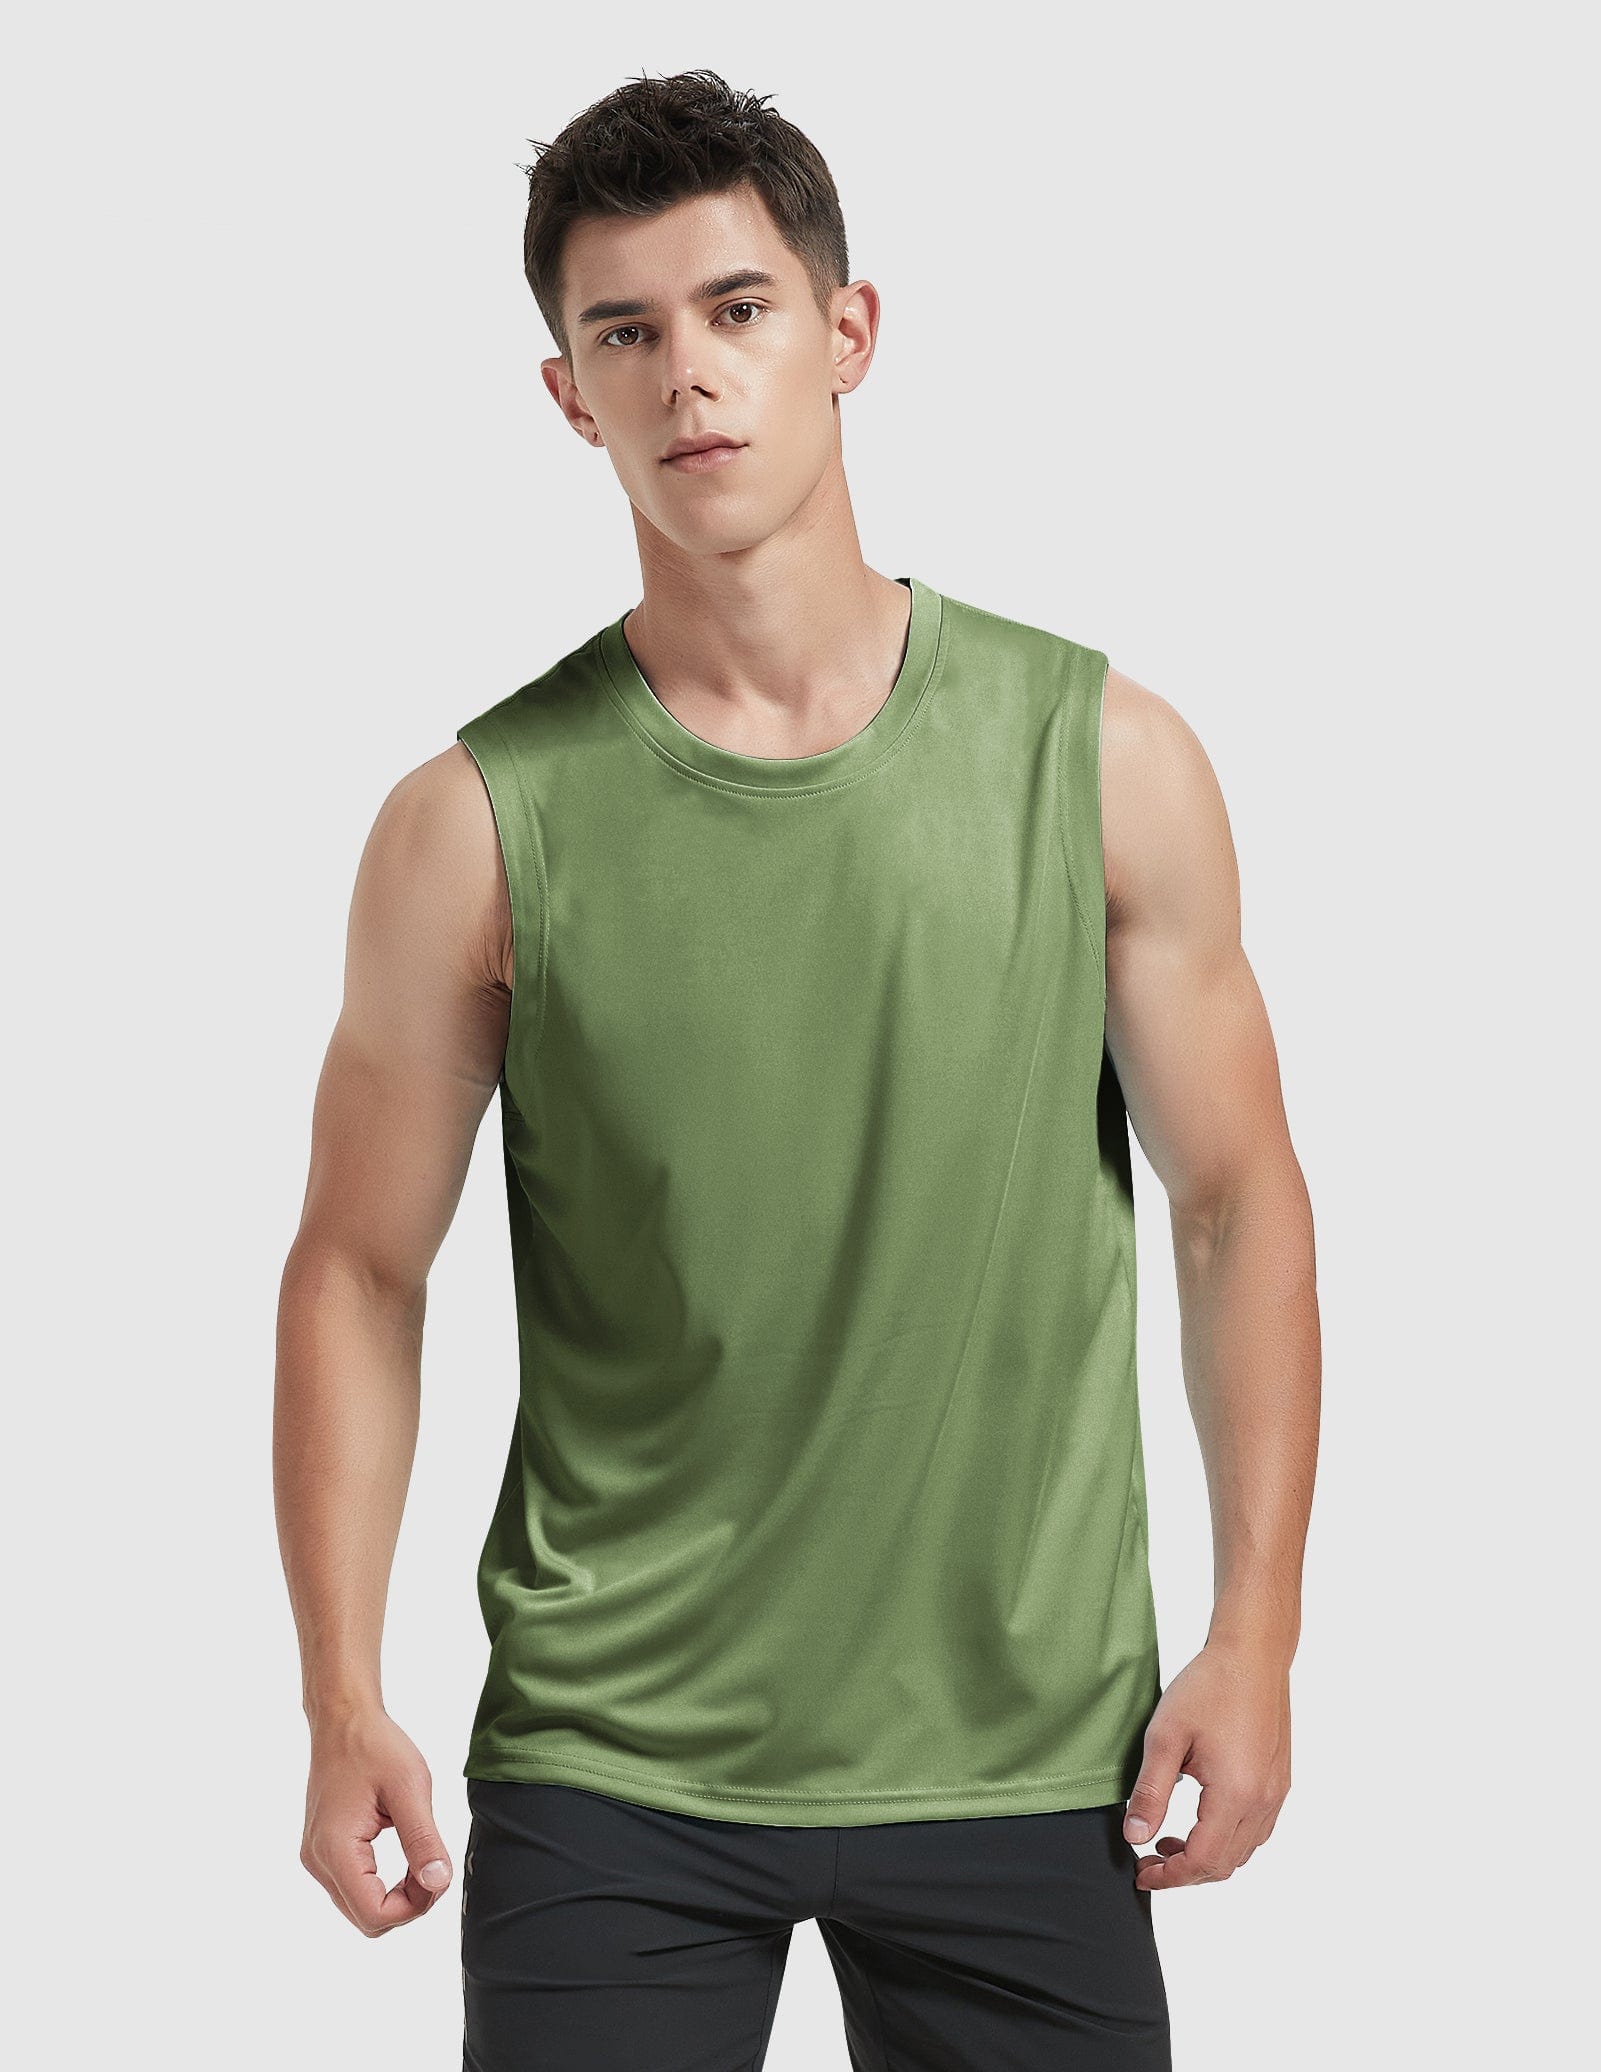 Men's Lightweight UPF 50+ Sun Shirts Quick Dry Tank Tops Men's Tank Top Army Green / S MIER